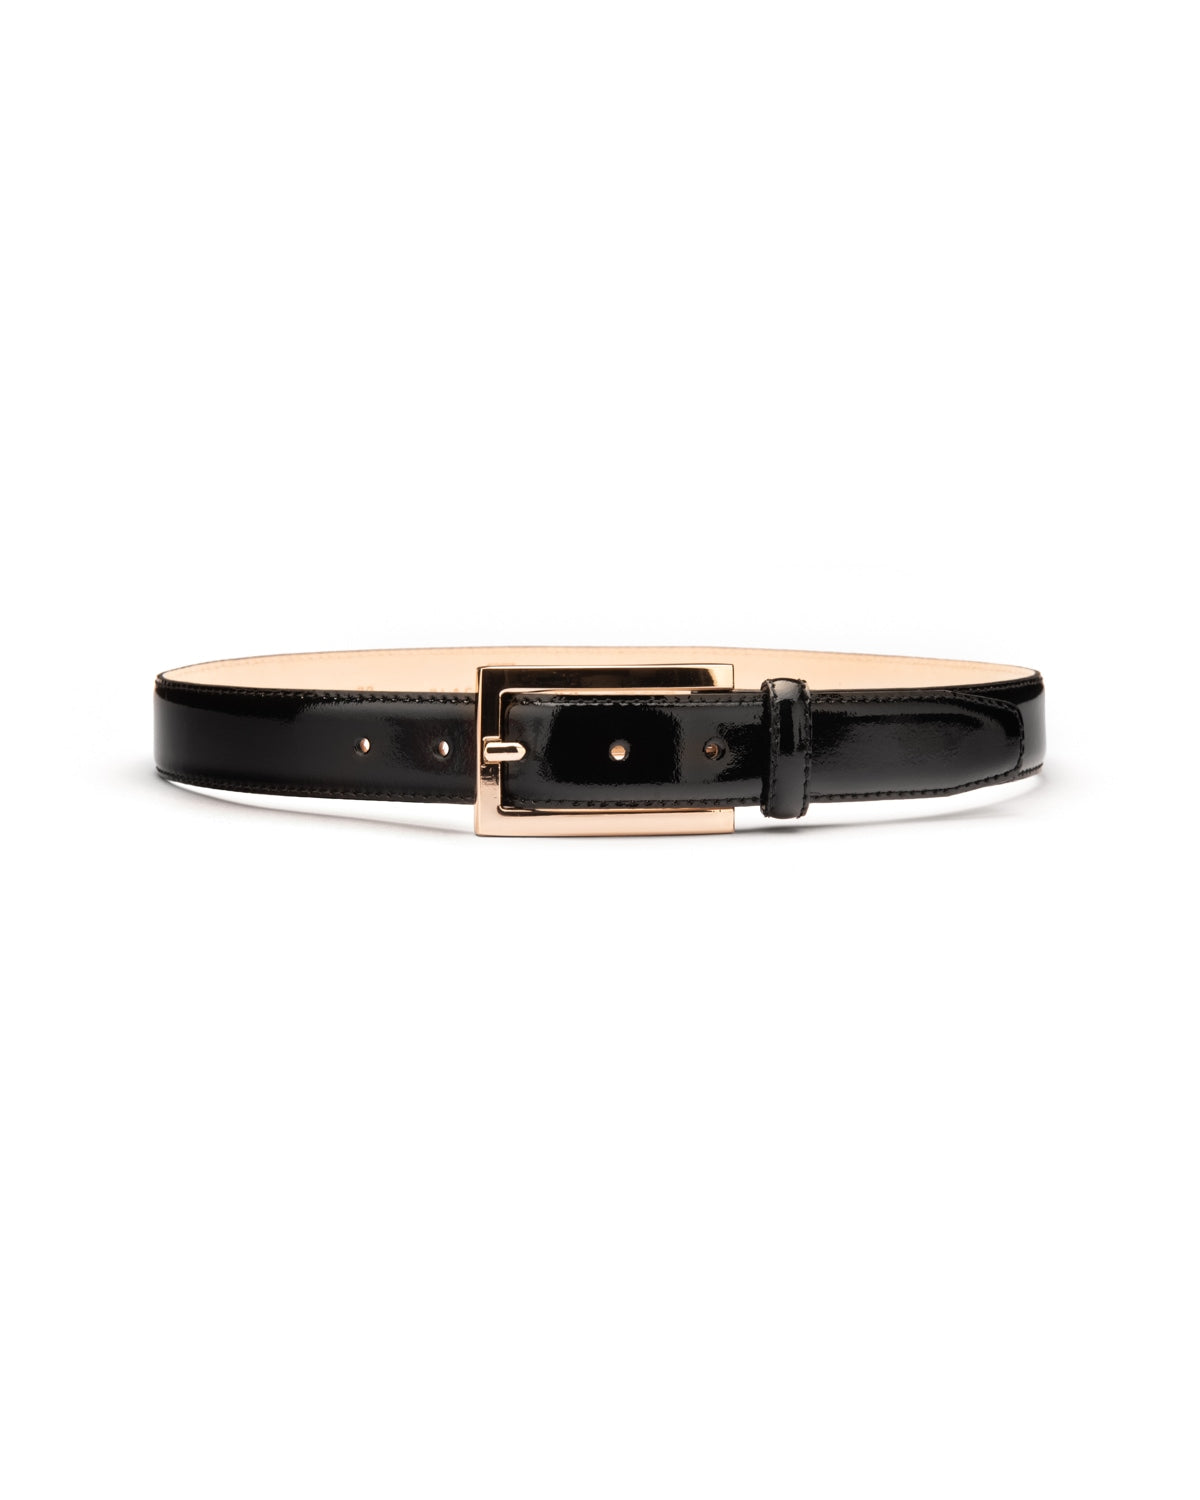 Molly slim patent leather waist belt